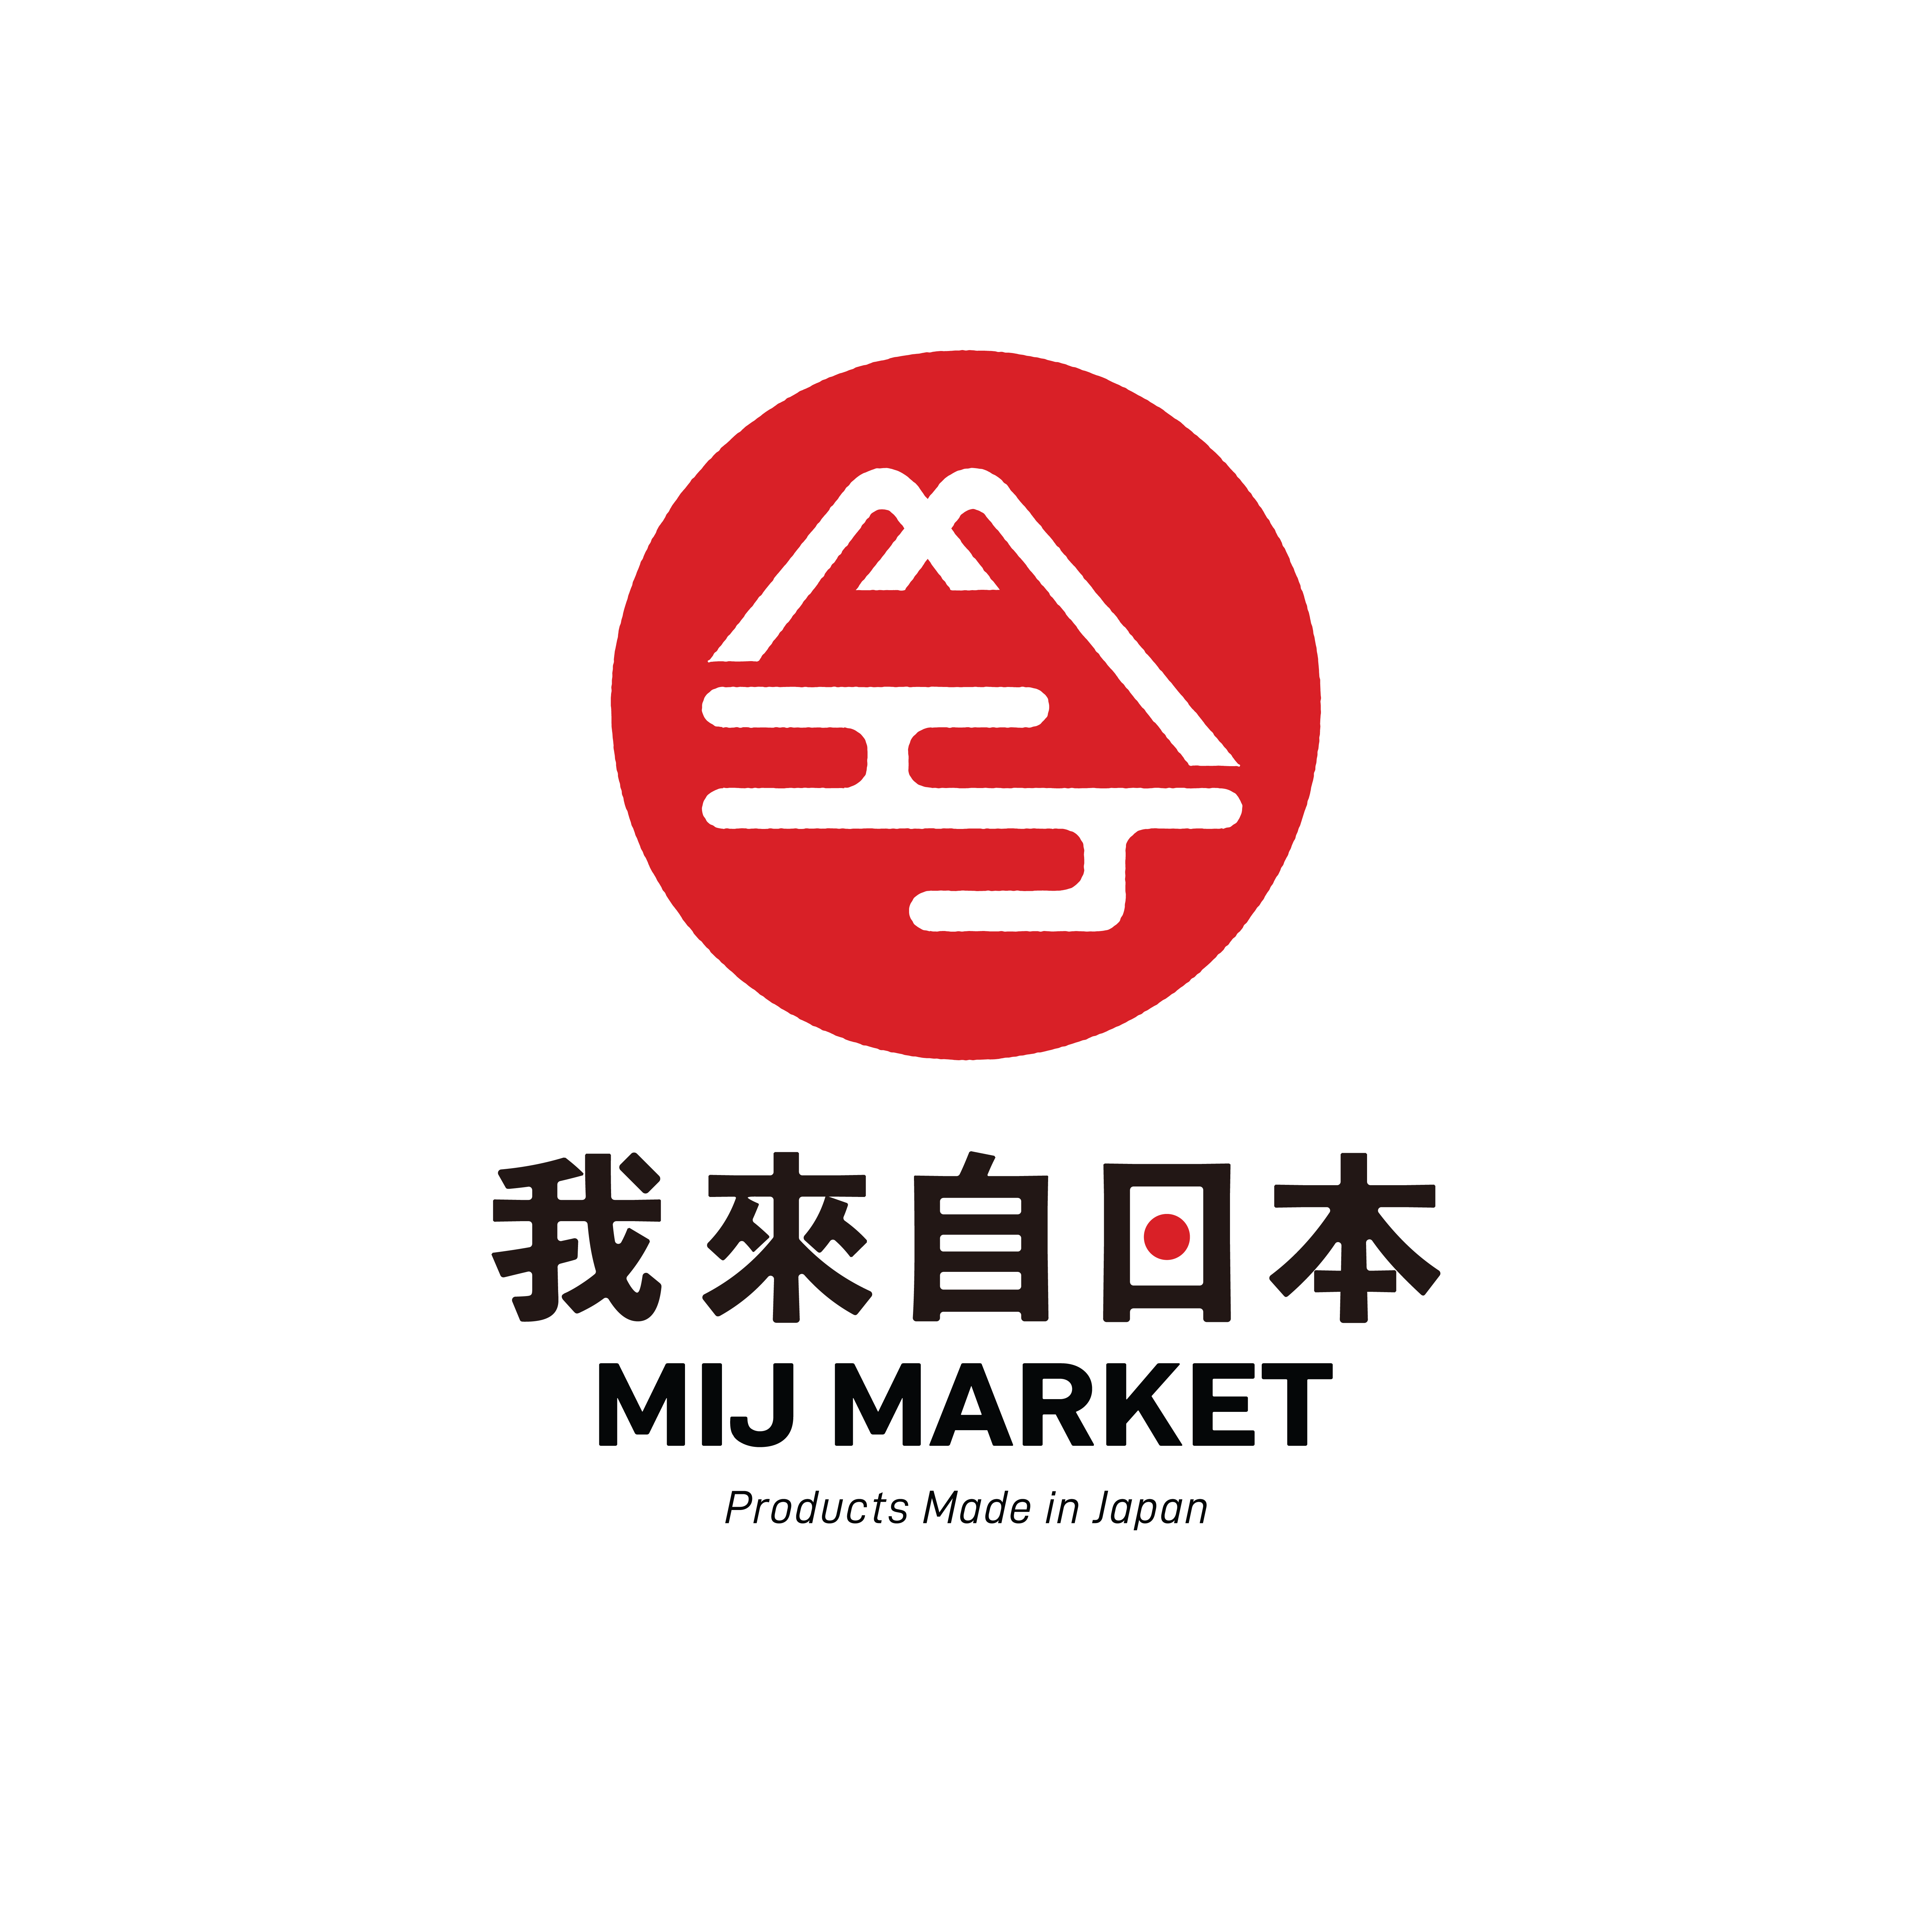 MIJ Market